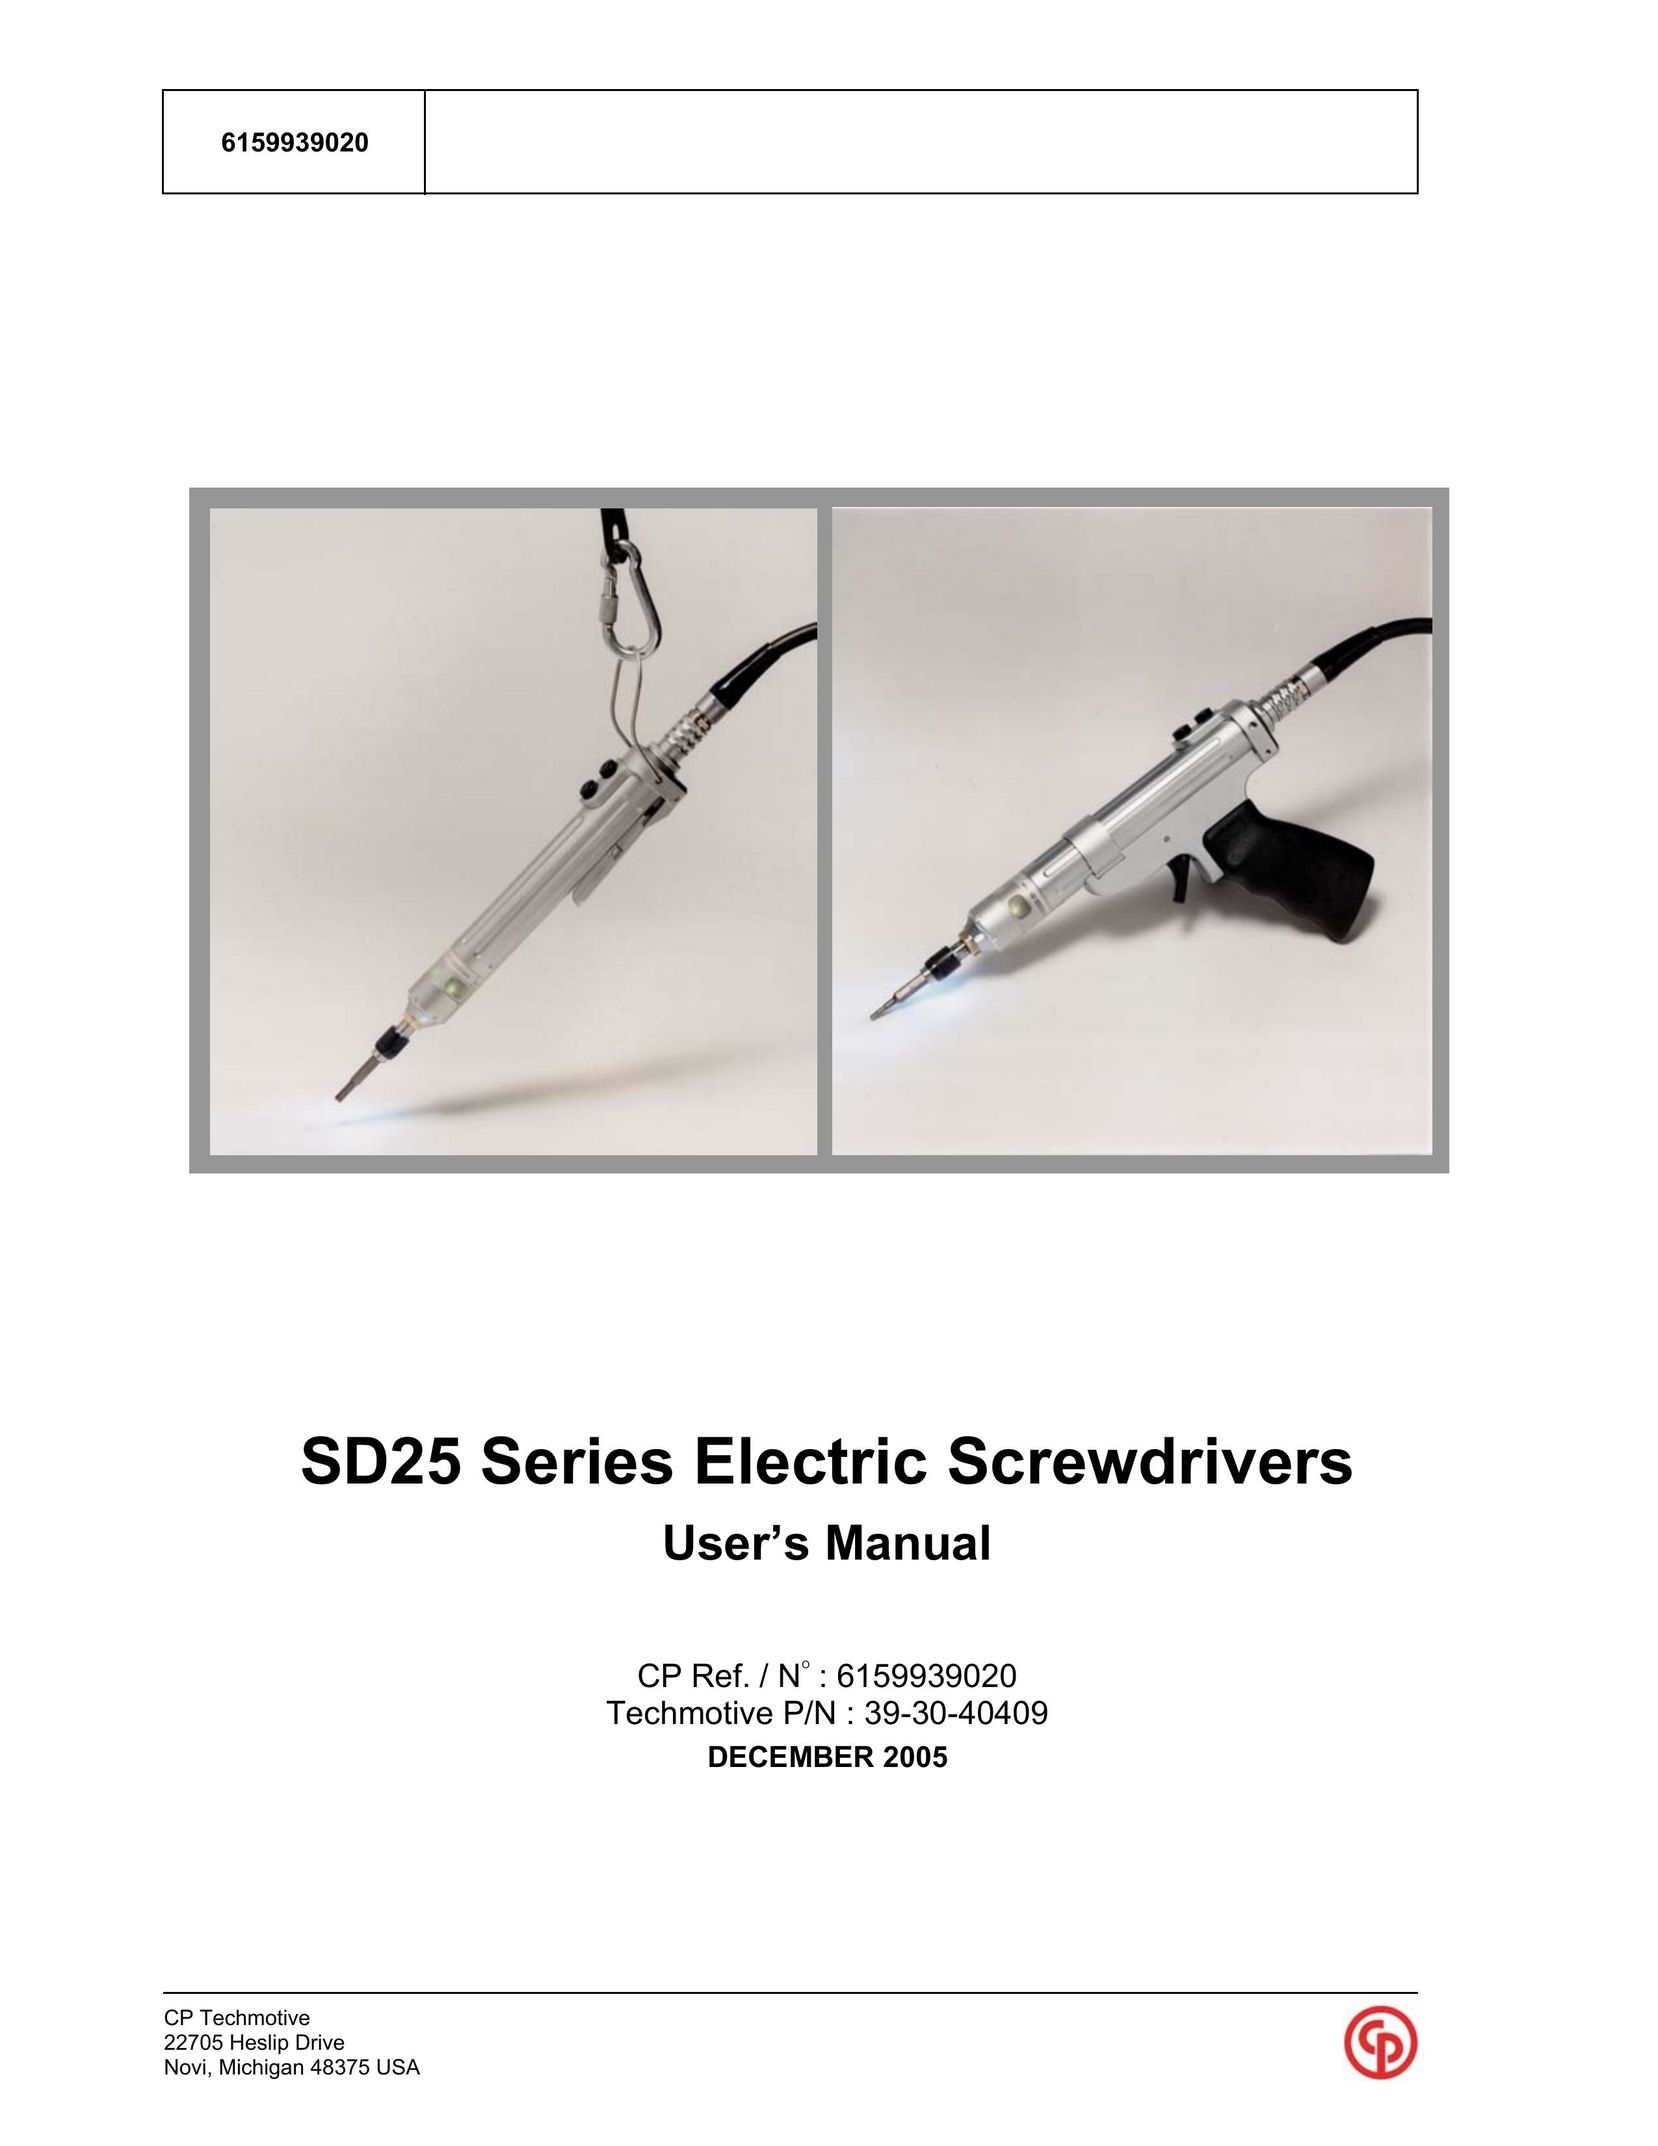 Chicago Pneumatic SD25 Power Screwdriver User Manual